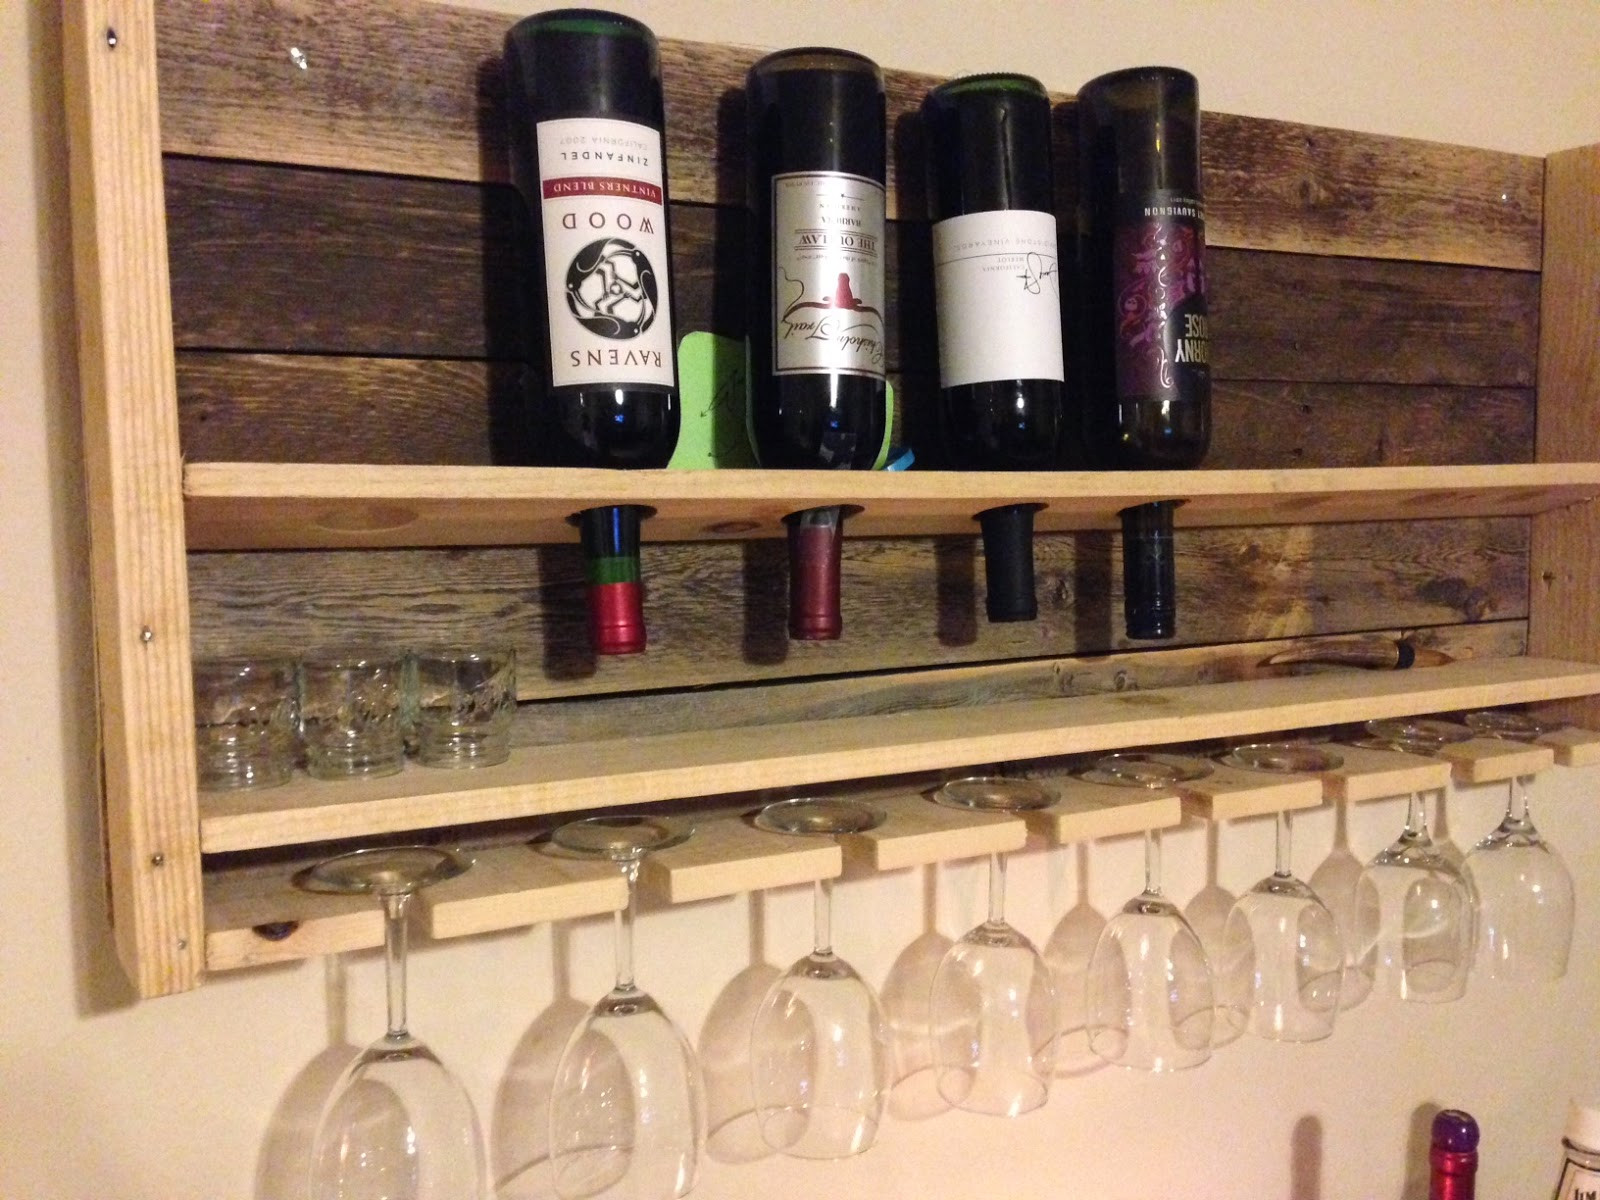 Best ideas about DIY Pallet Wine Racks
. Save or Pin Pots Pans & Paintbrushes DIY Pallet Wine Rack Now.